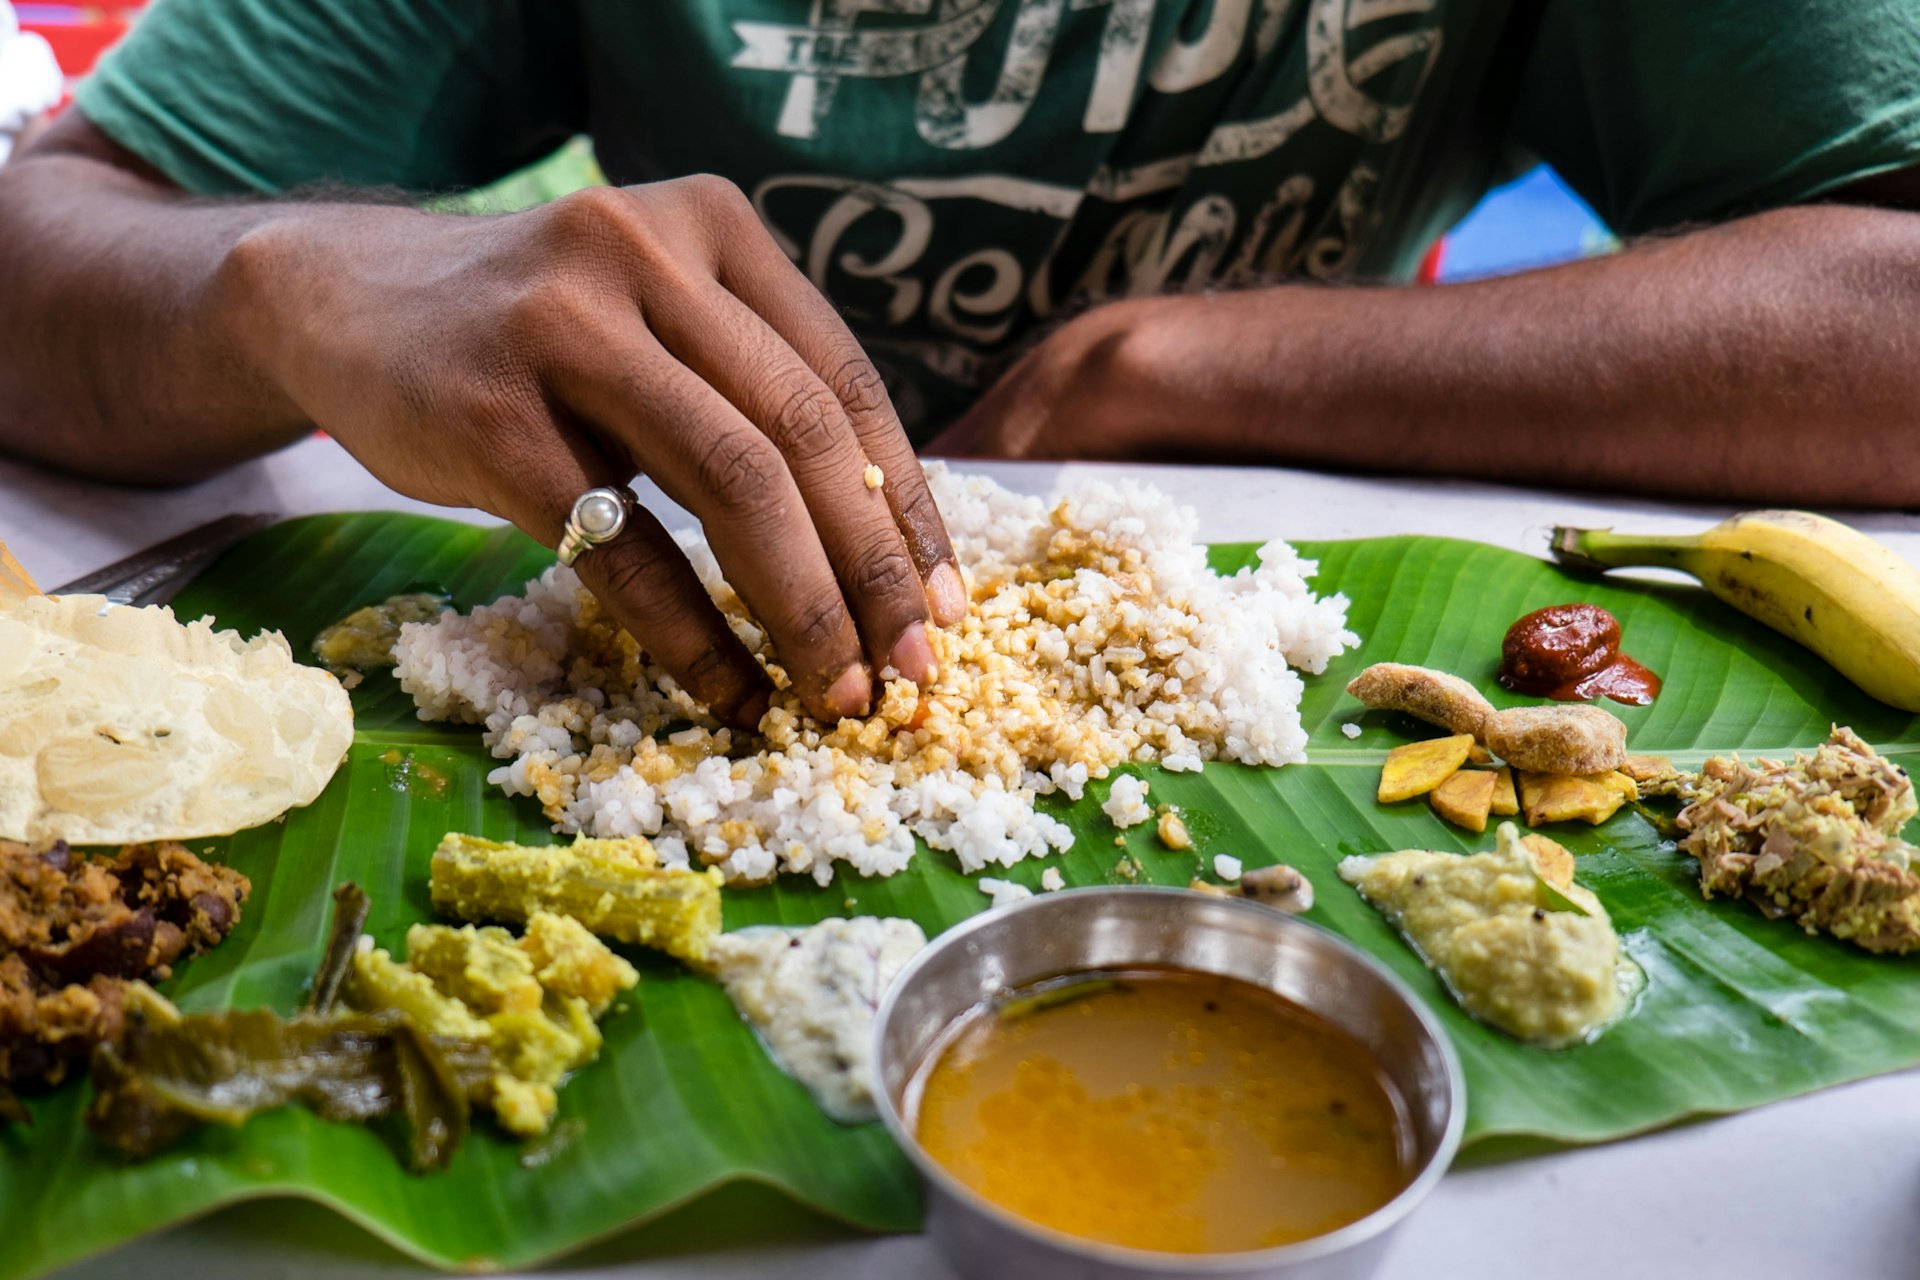 Kerala sadya, a typical Keralite vegetarian dish served on a banana leaf and eaten with fingers